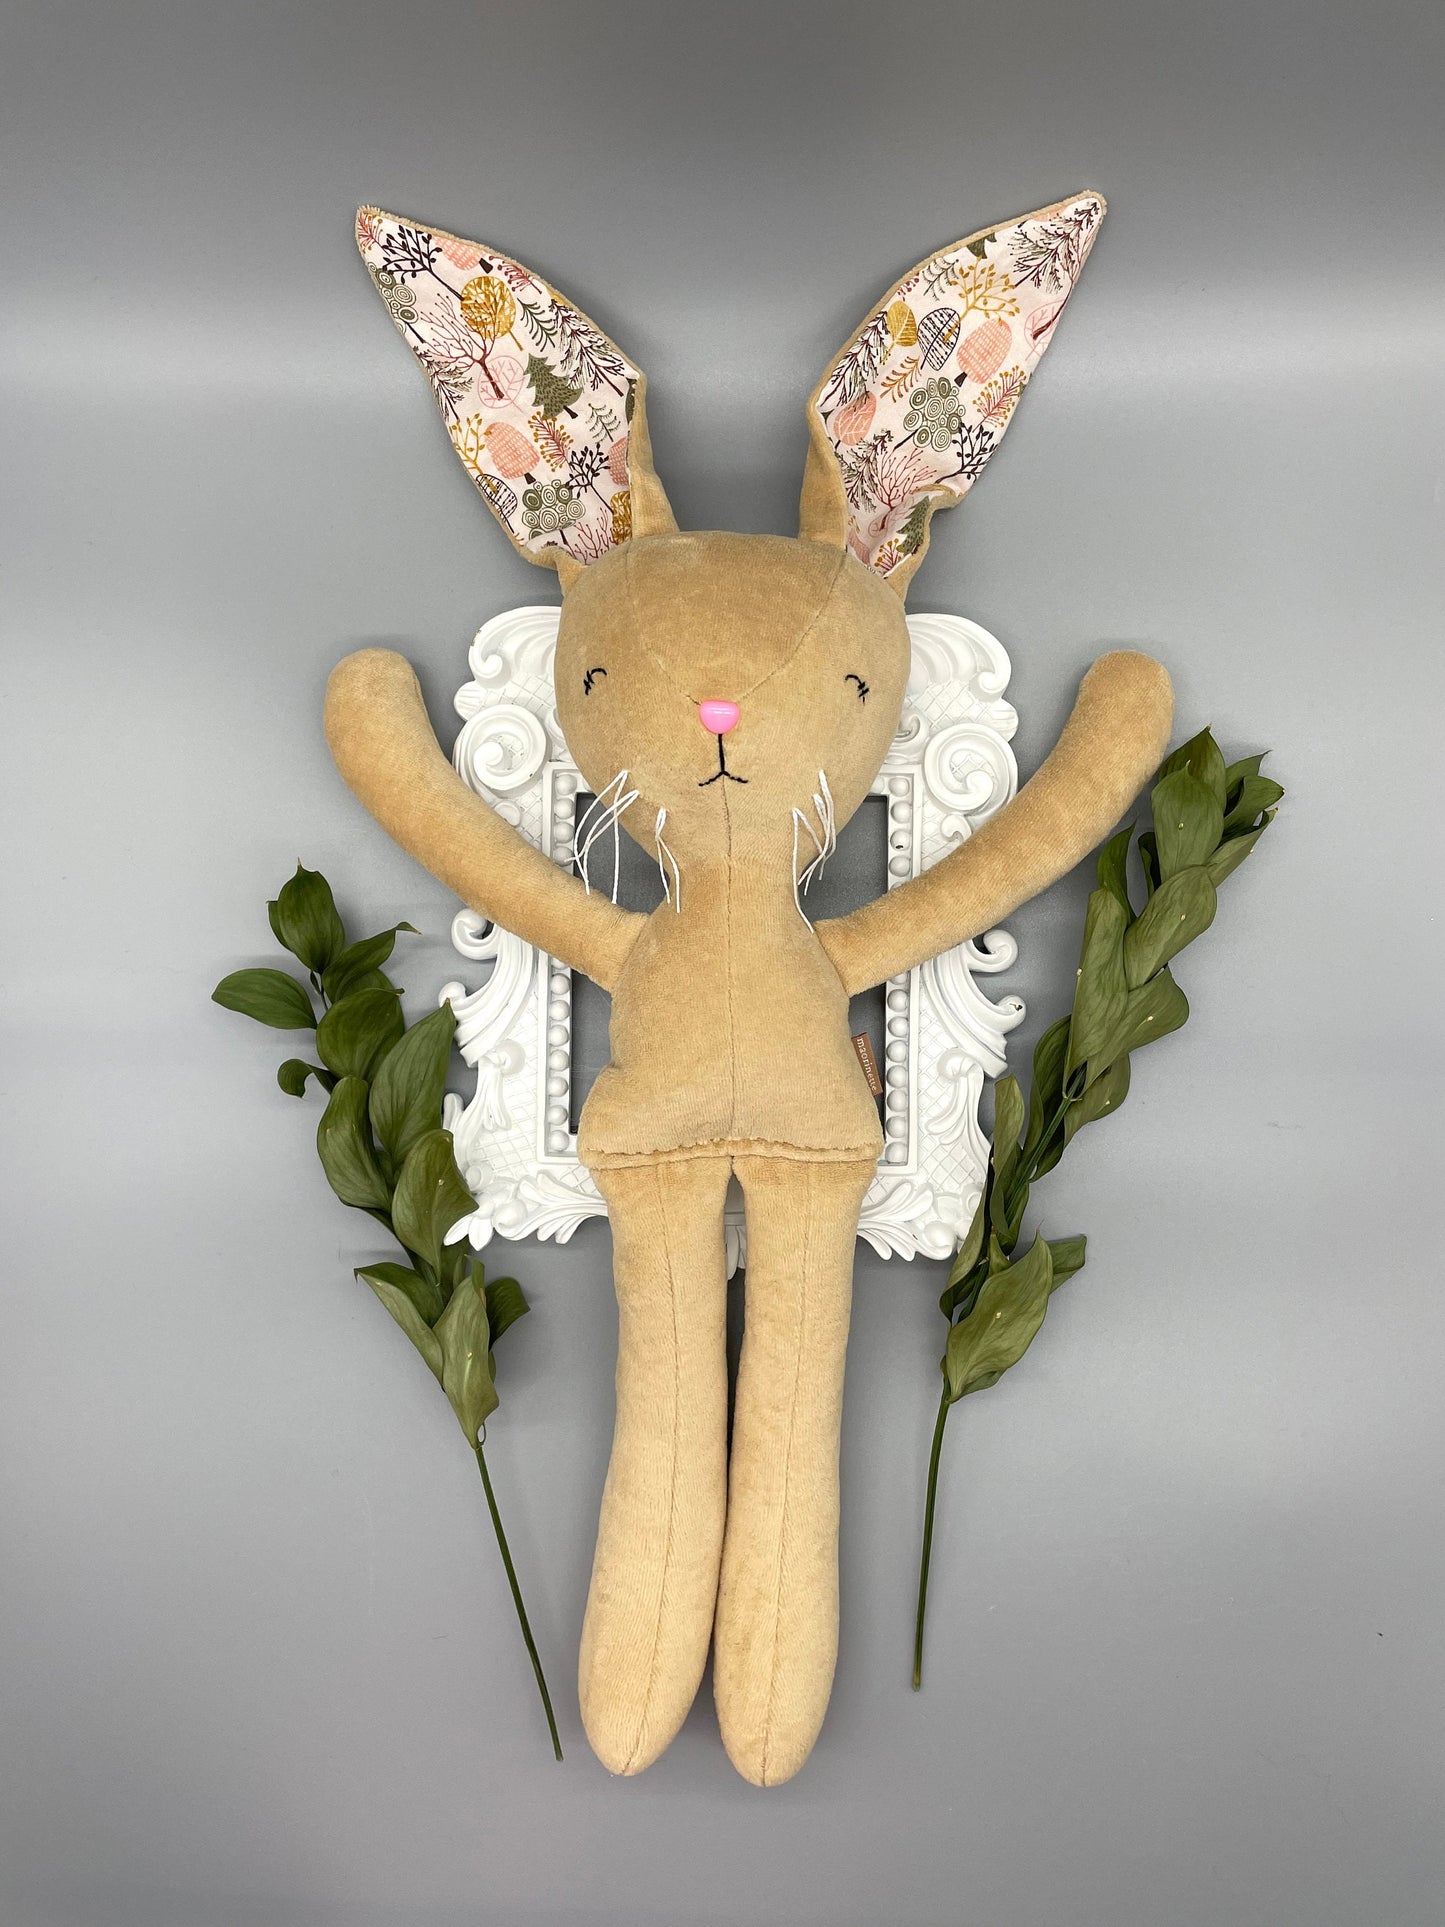 Reversible Handmade Easter Bunny, "GALAHAD", Stuffed animal, boy easter basket, plush, easter gift, gift for kids, Easter Doll, brown bunny